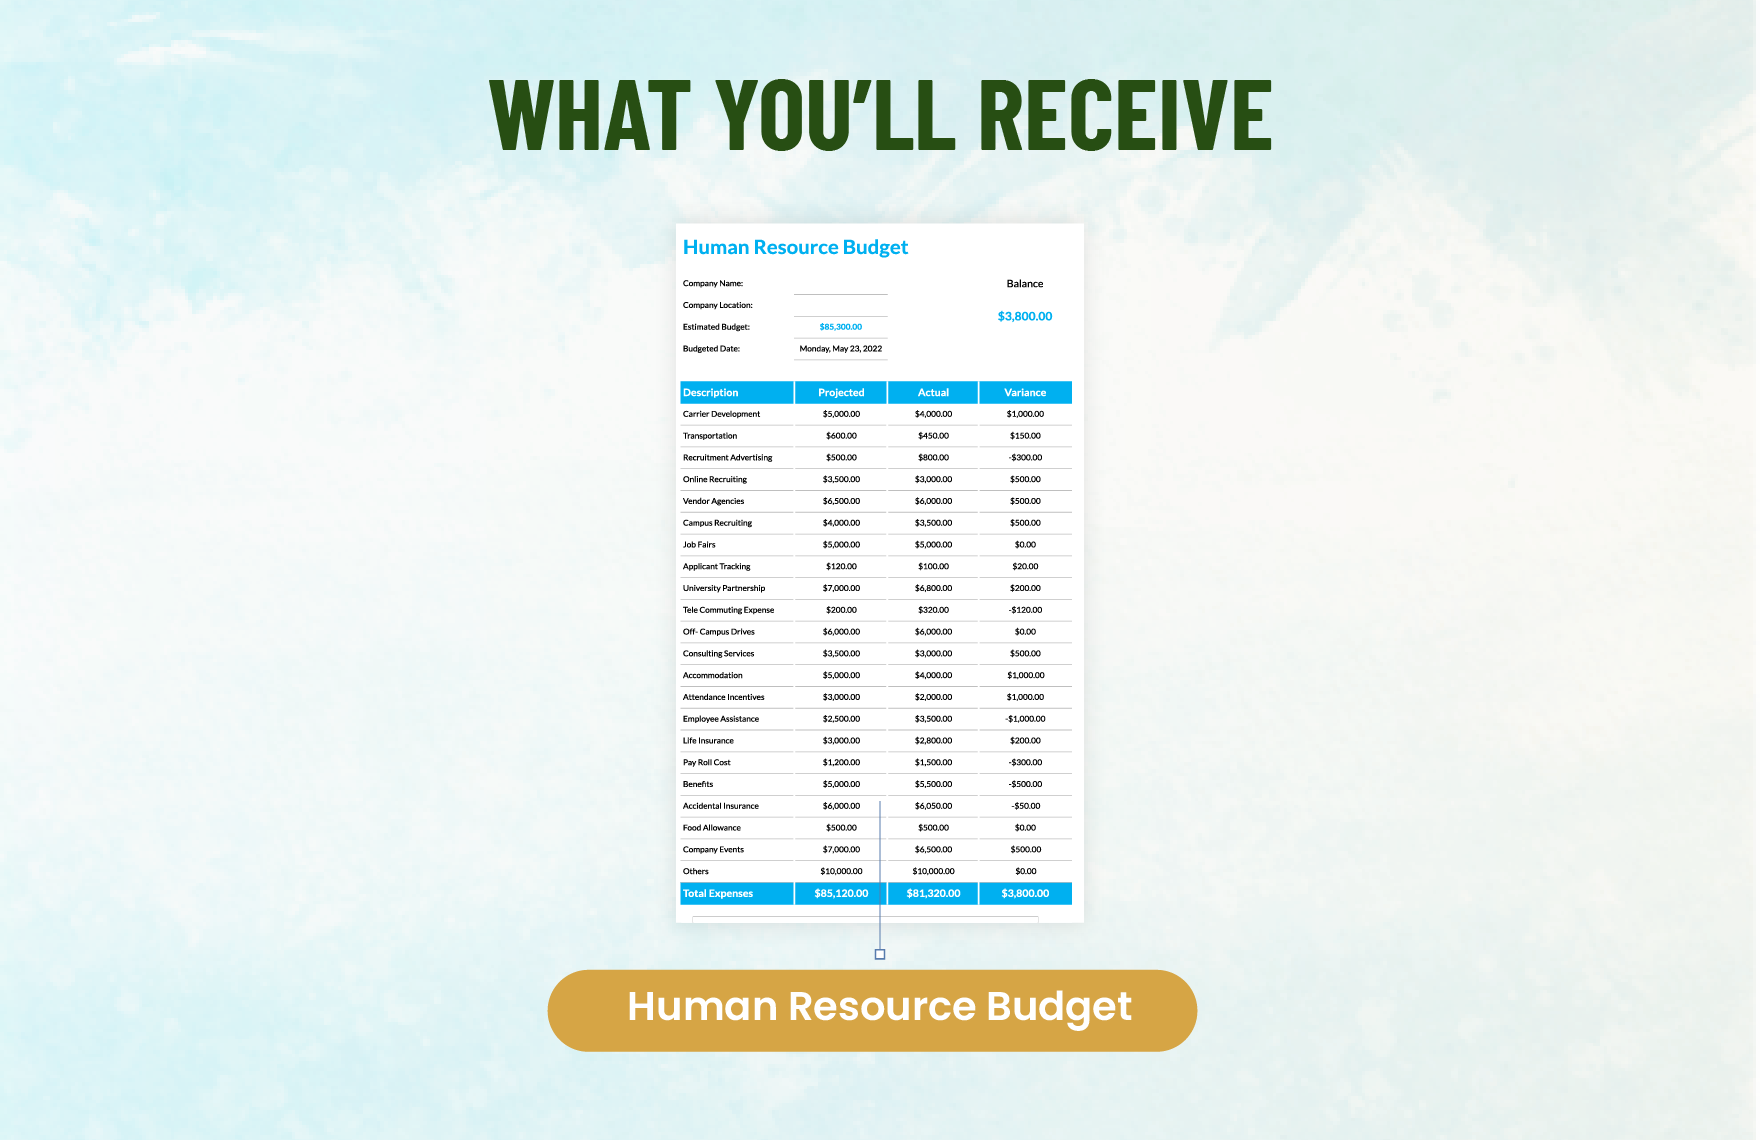 Human Resource Budget Template